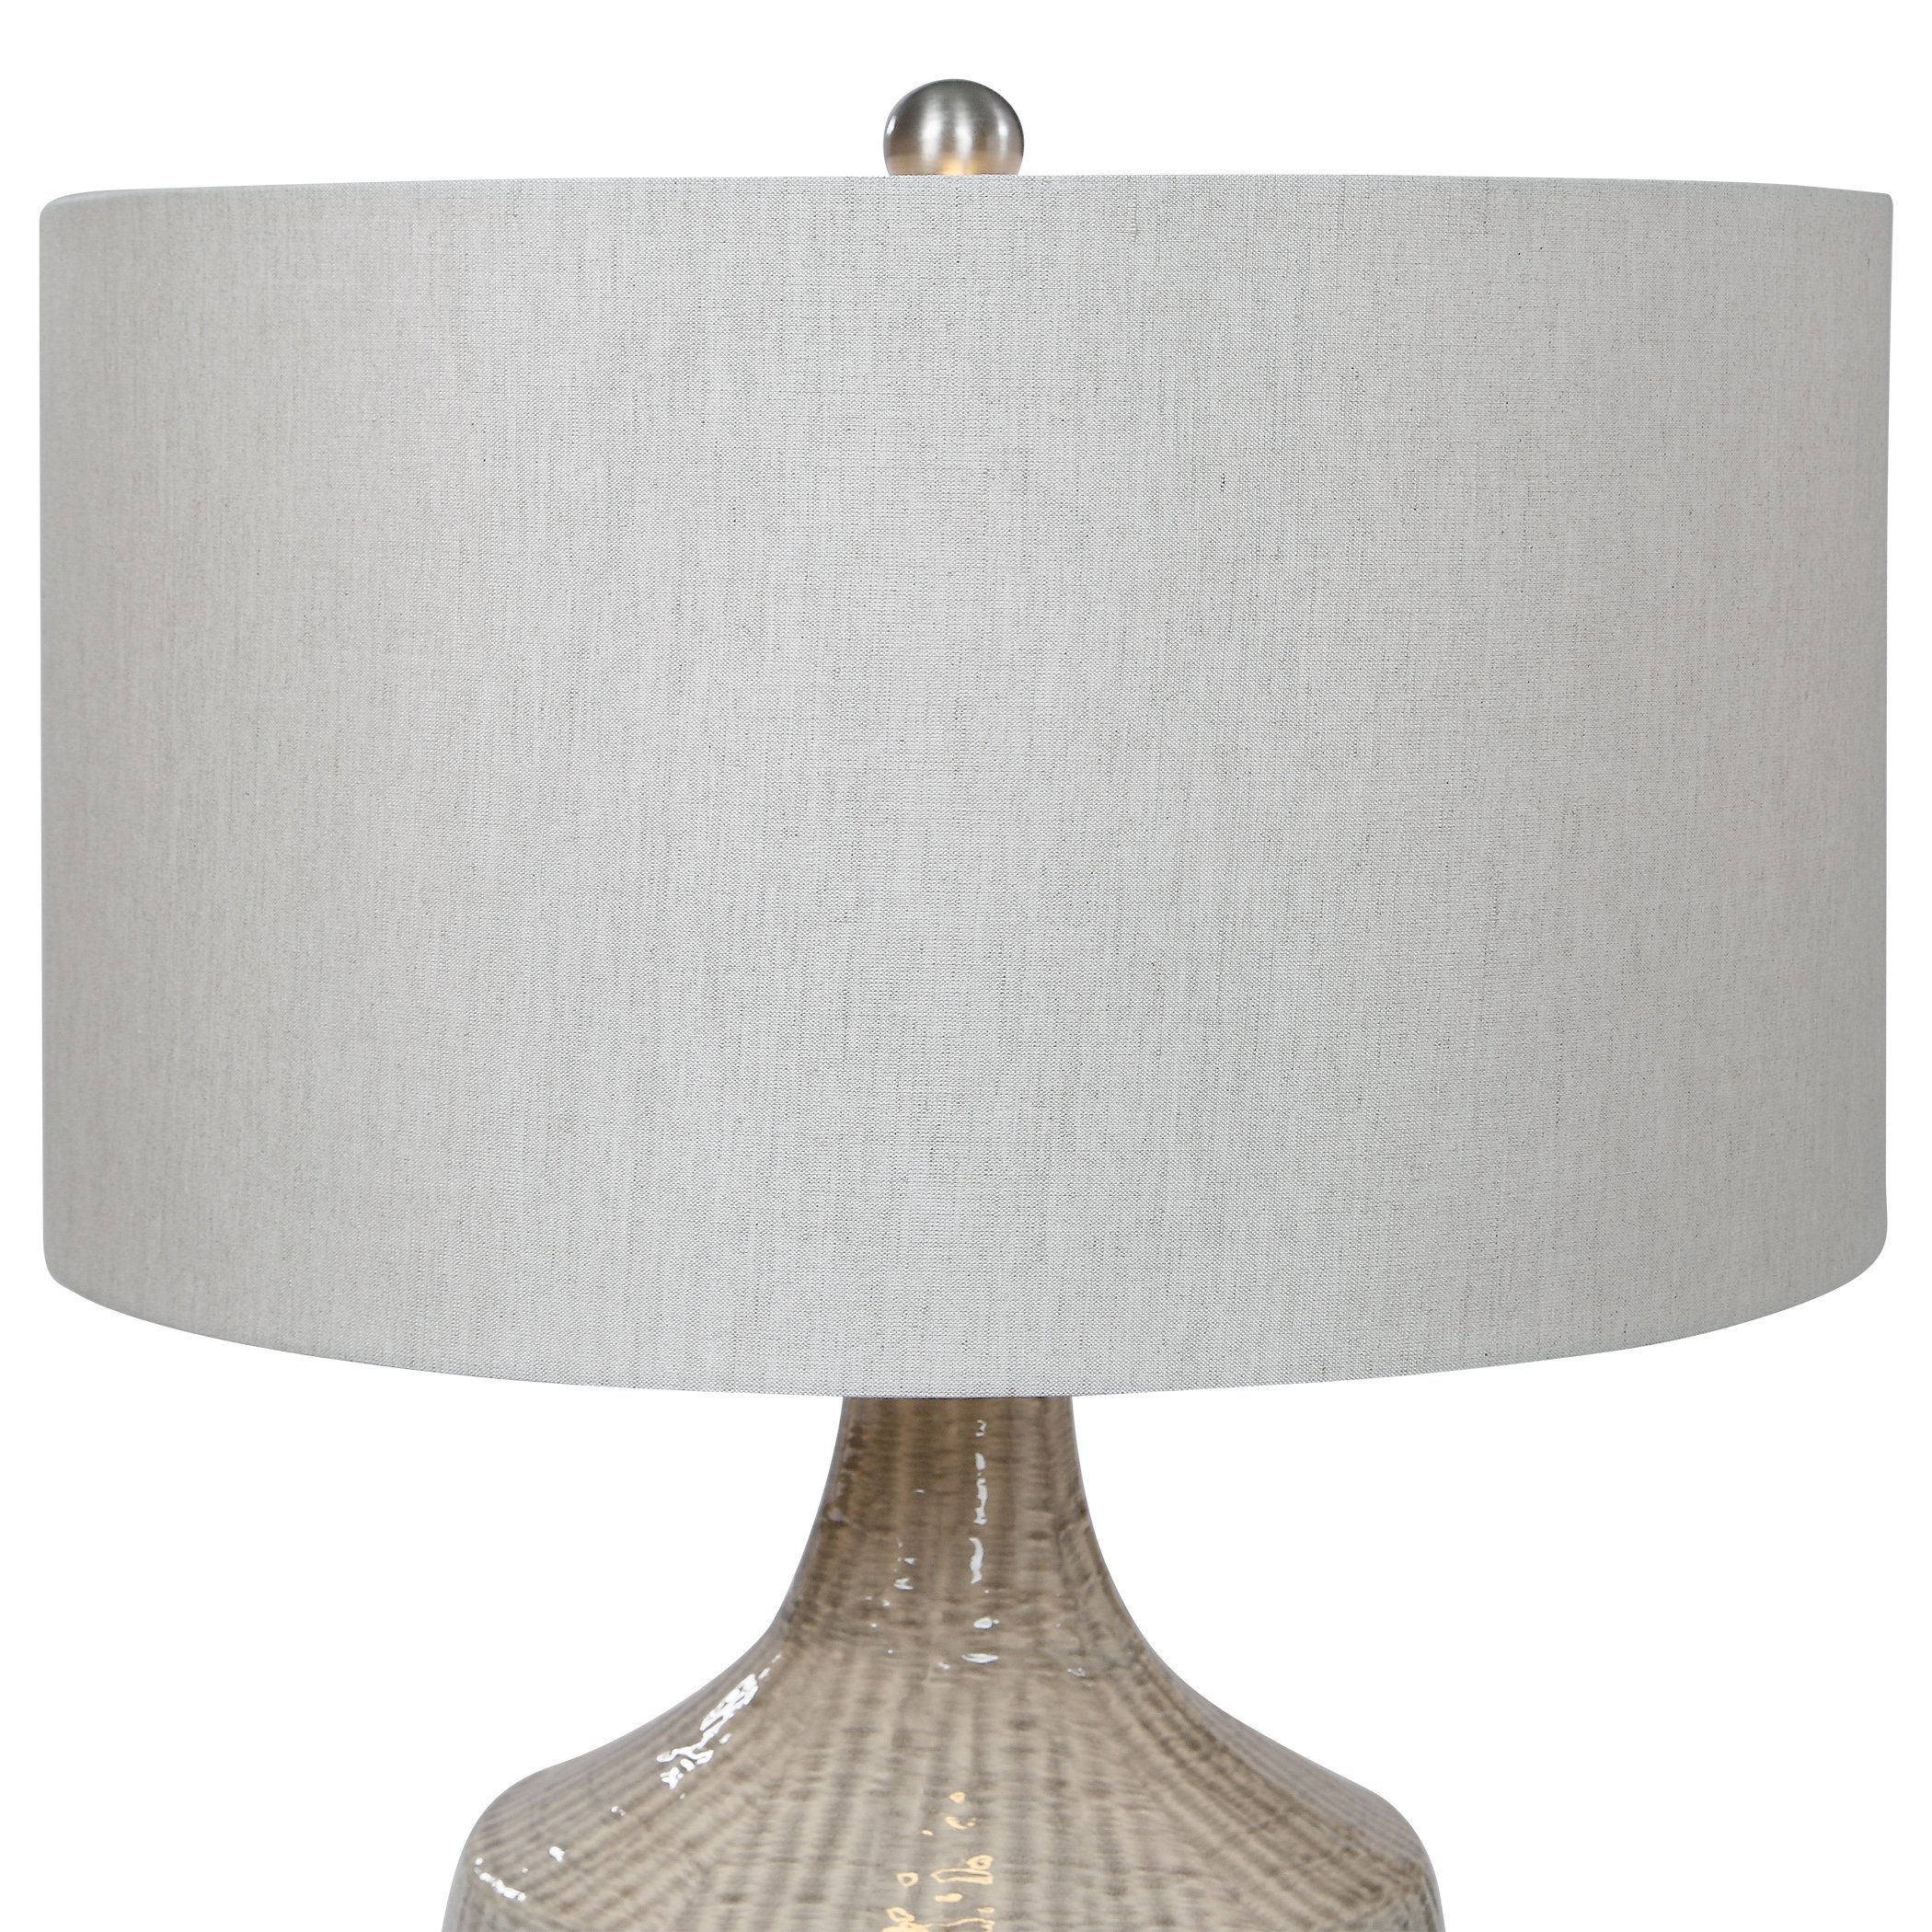 Felipe Gray Table Lamp - Image 4